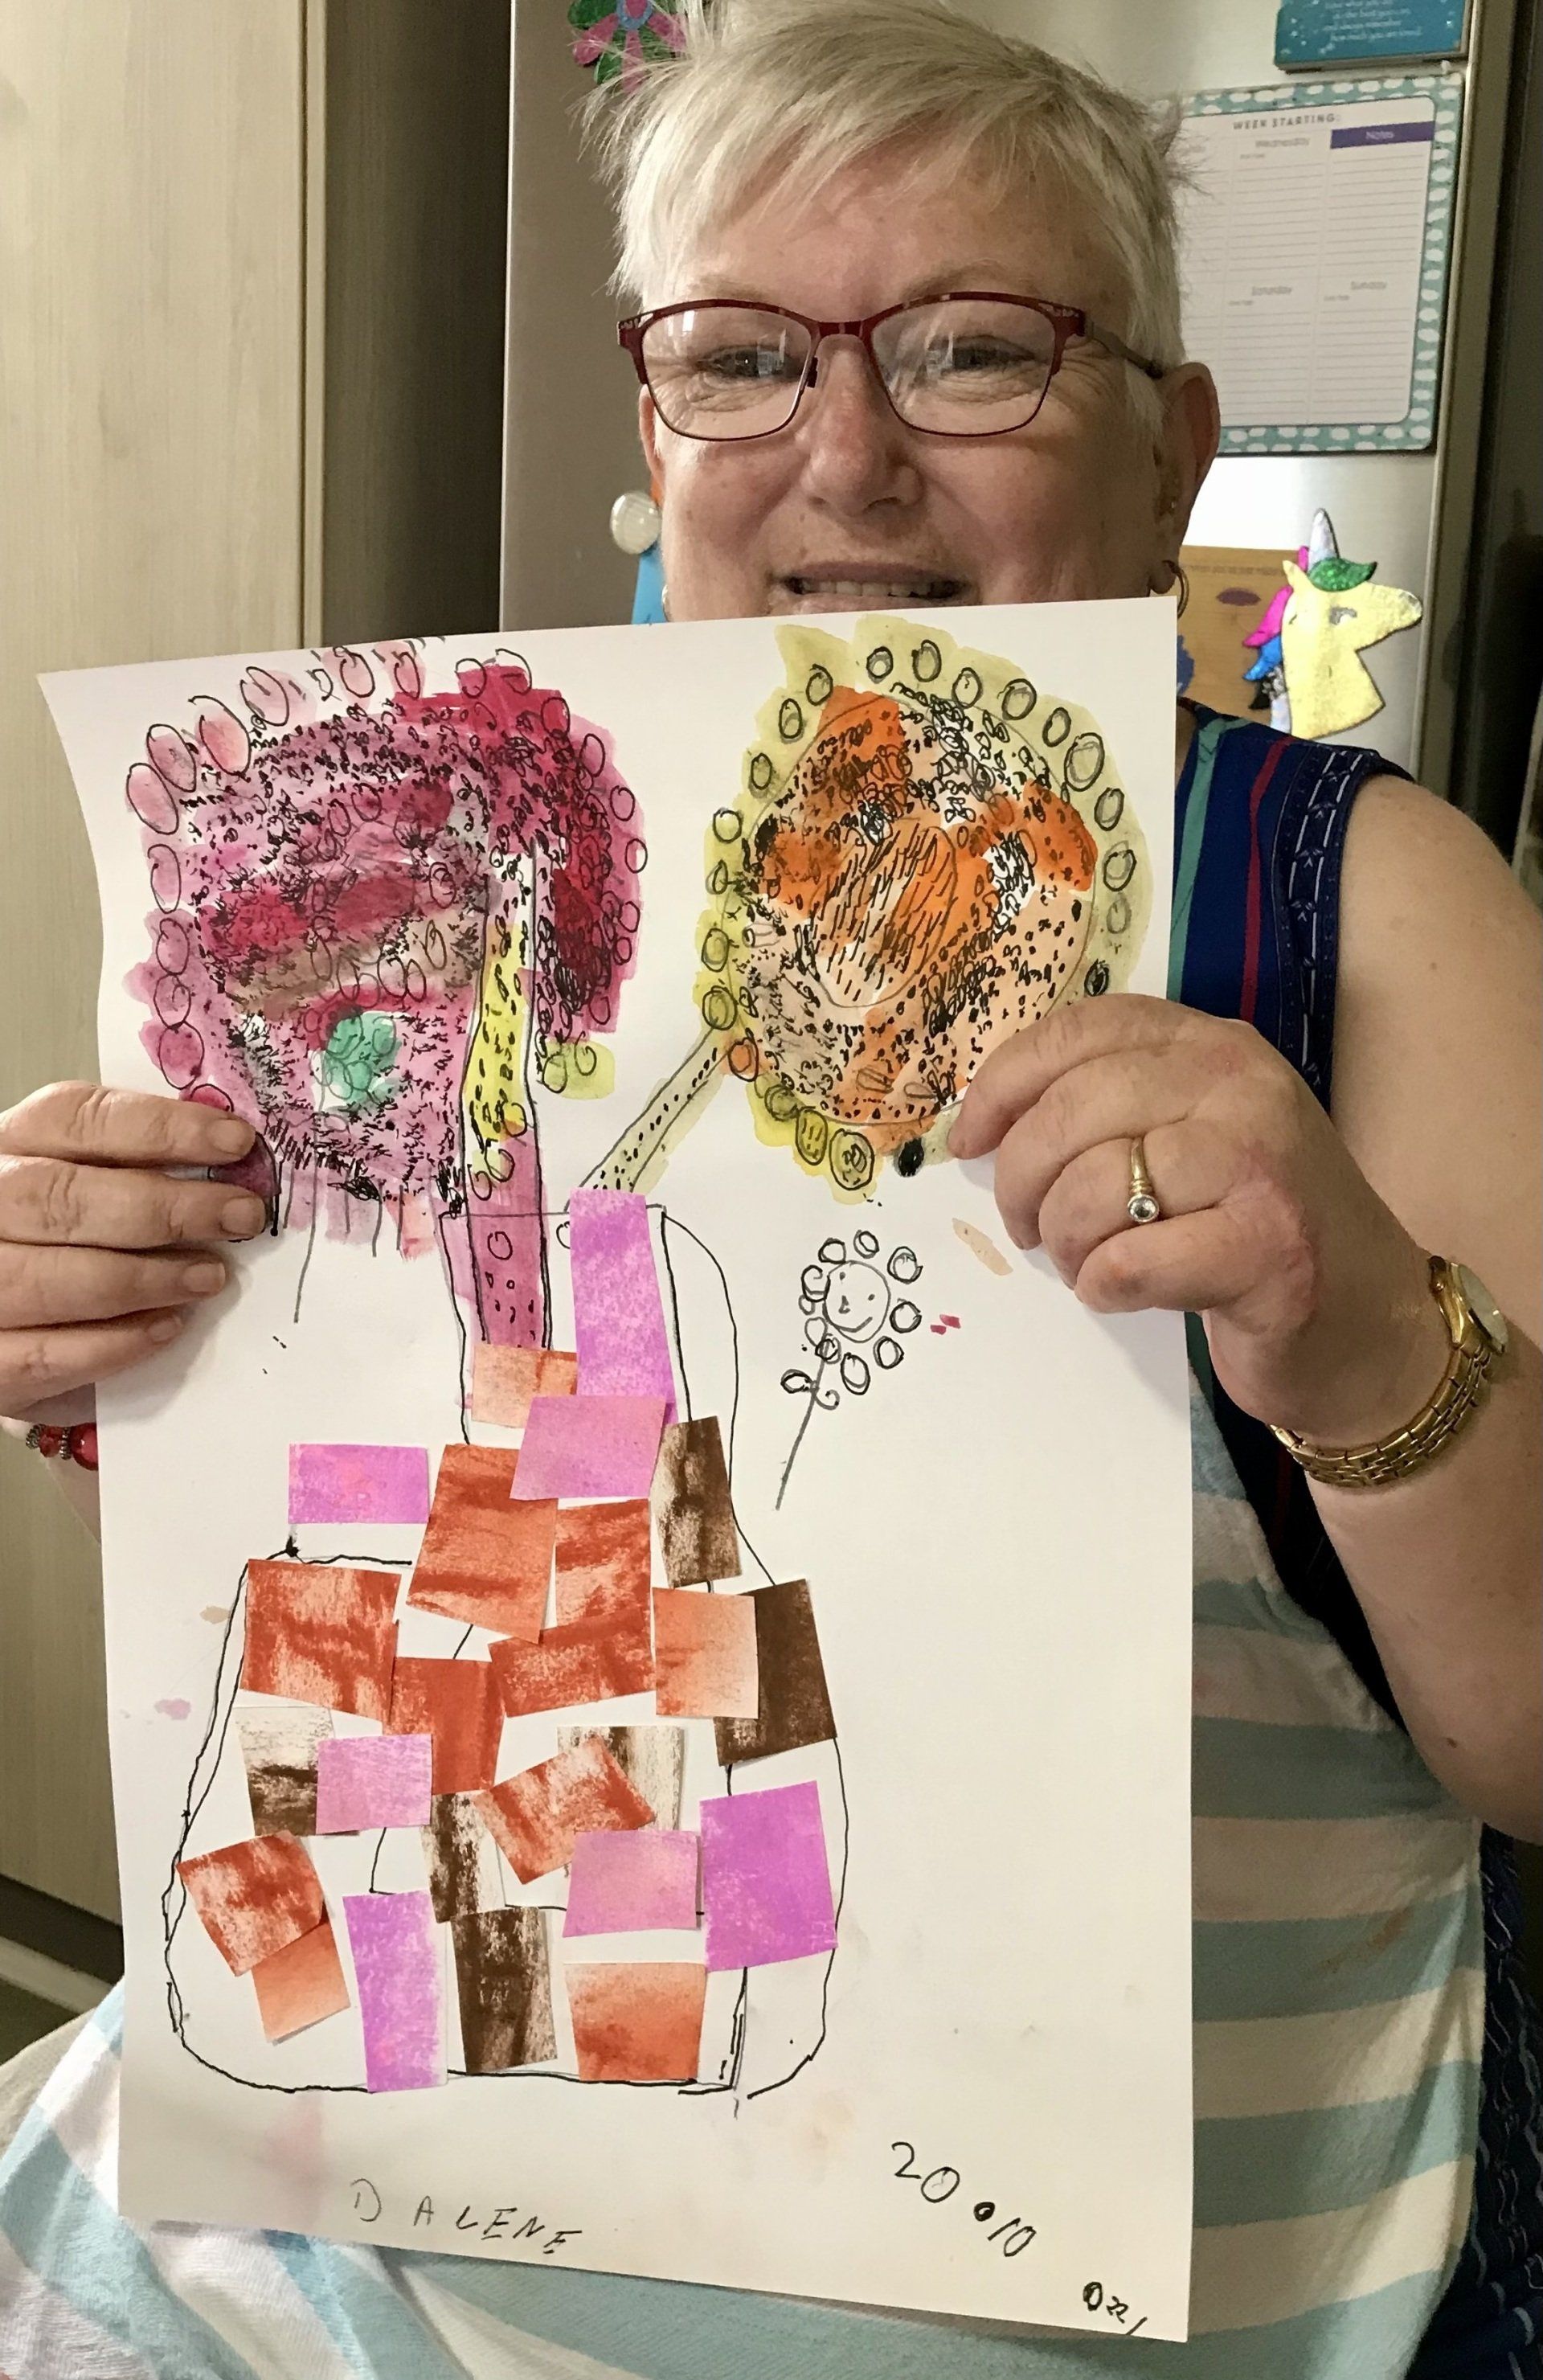 Darlene and her artwork of sunflowers in vase